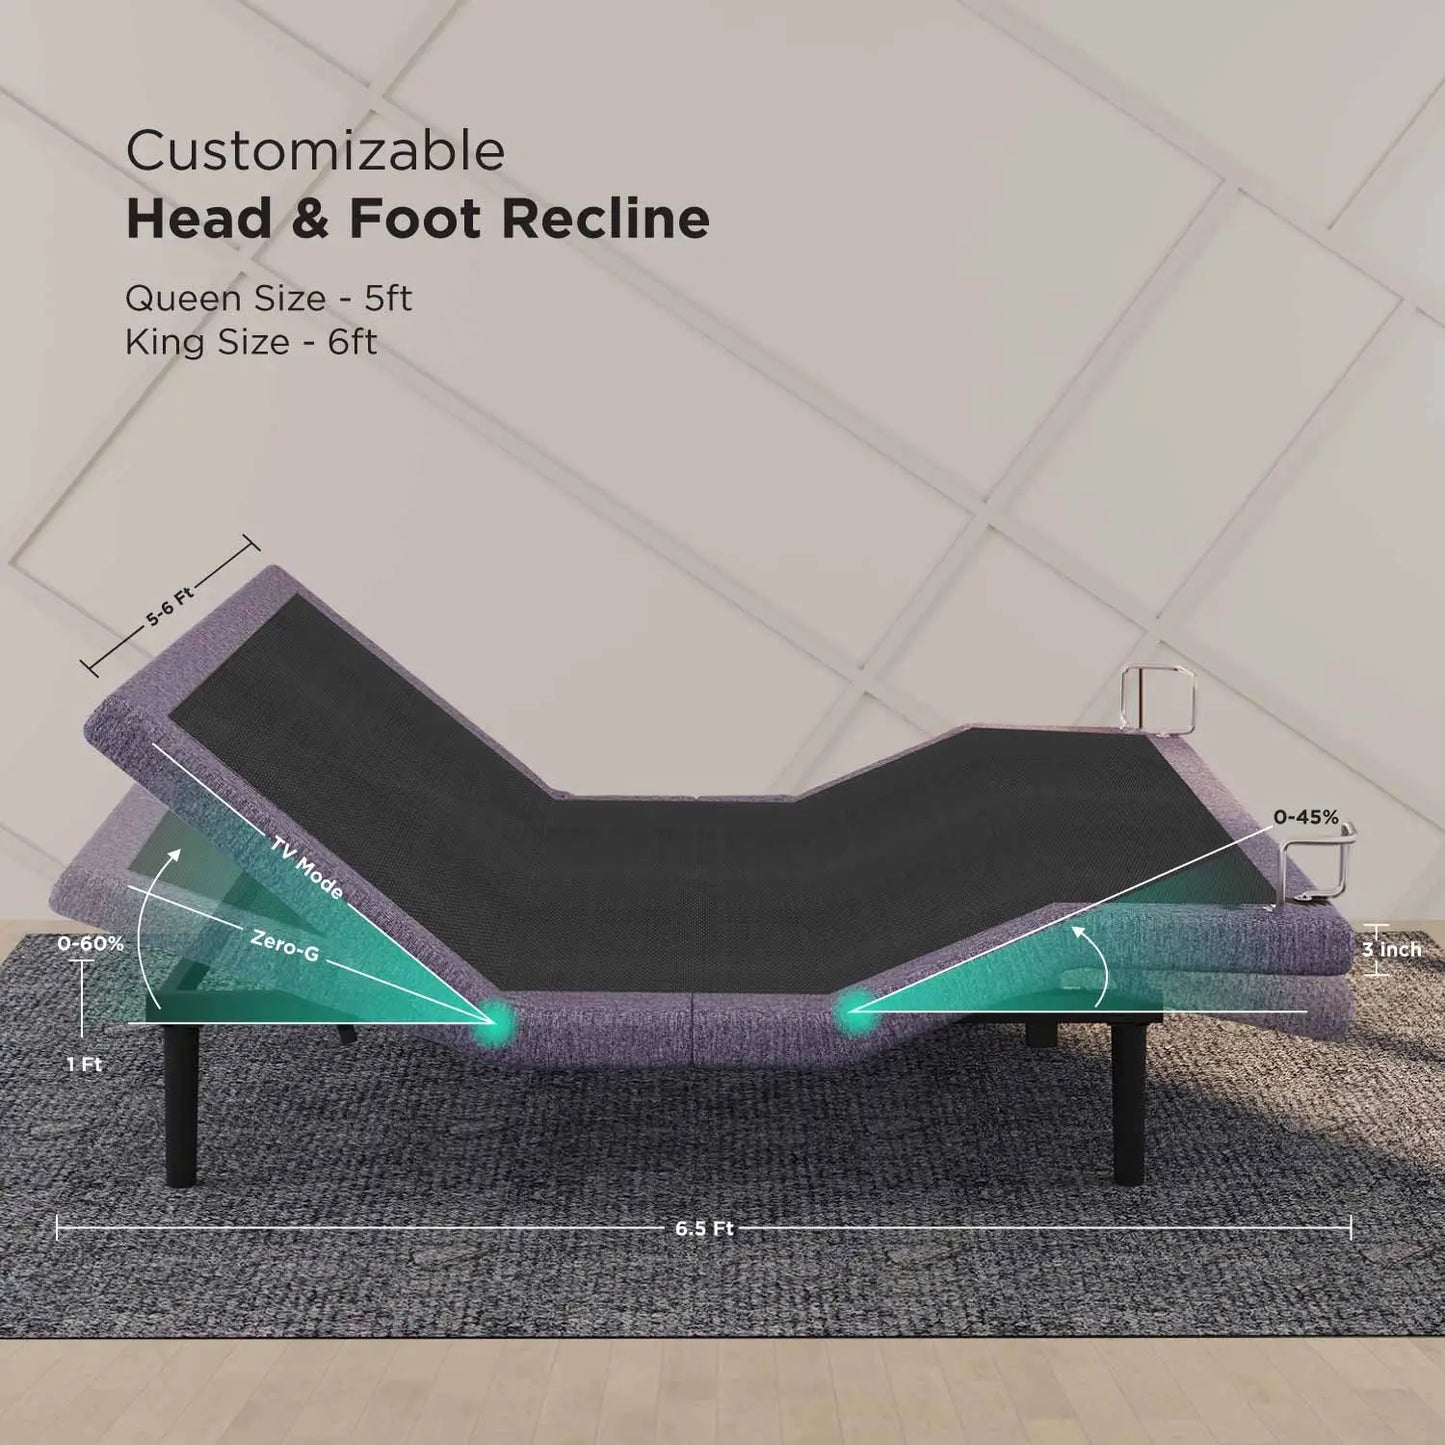 Customizable Head & Foot Recline 